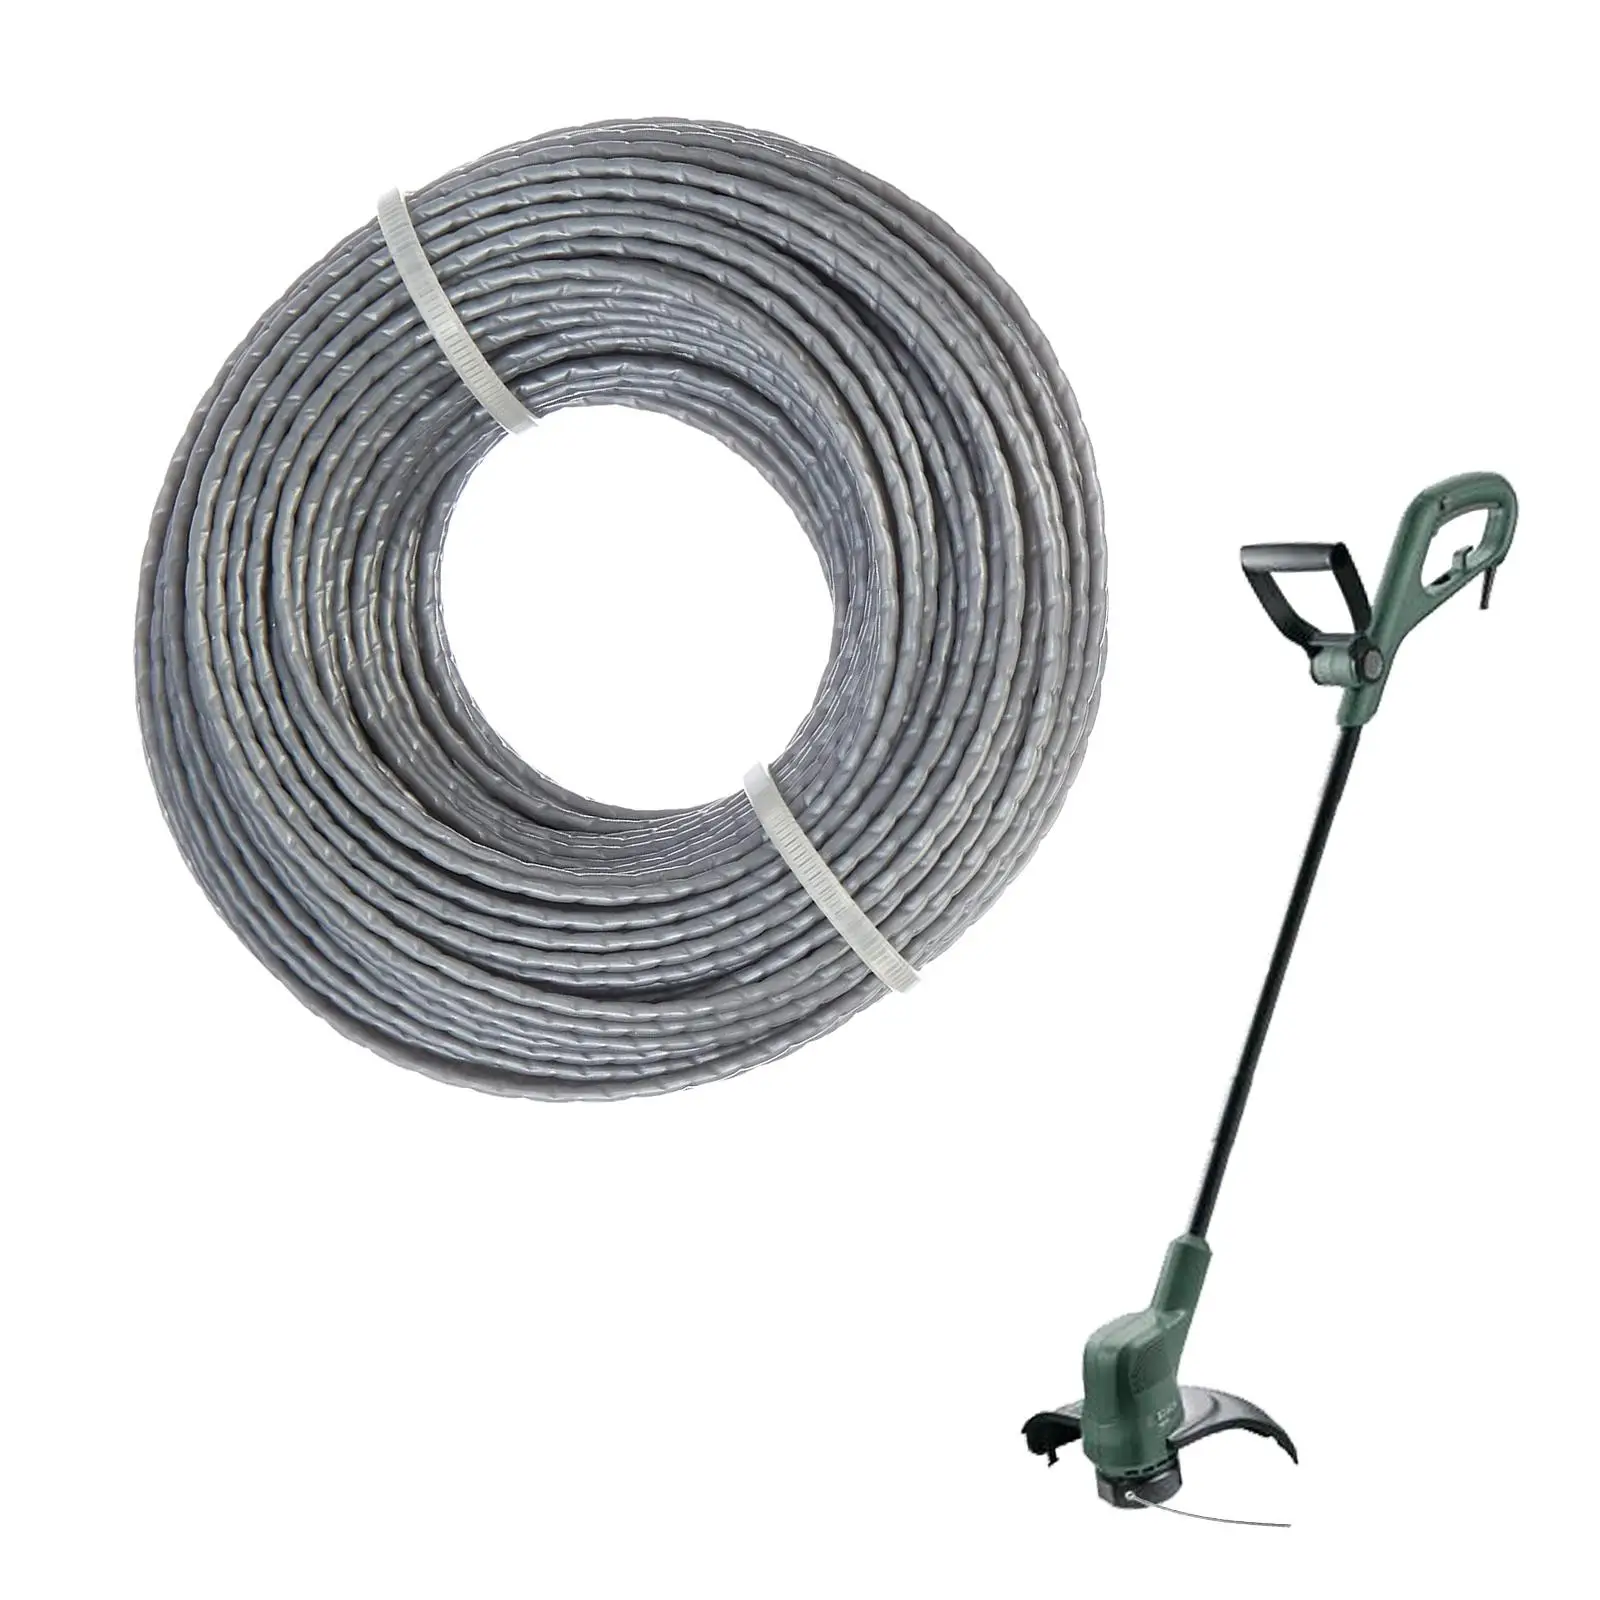 

Strimmer Trimmer Line Spool For BOSCH ART 24 27 30 36 Li 24m 1.65mm F016800462 Garden Power Tool Parts Grass Rope